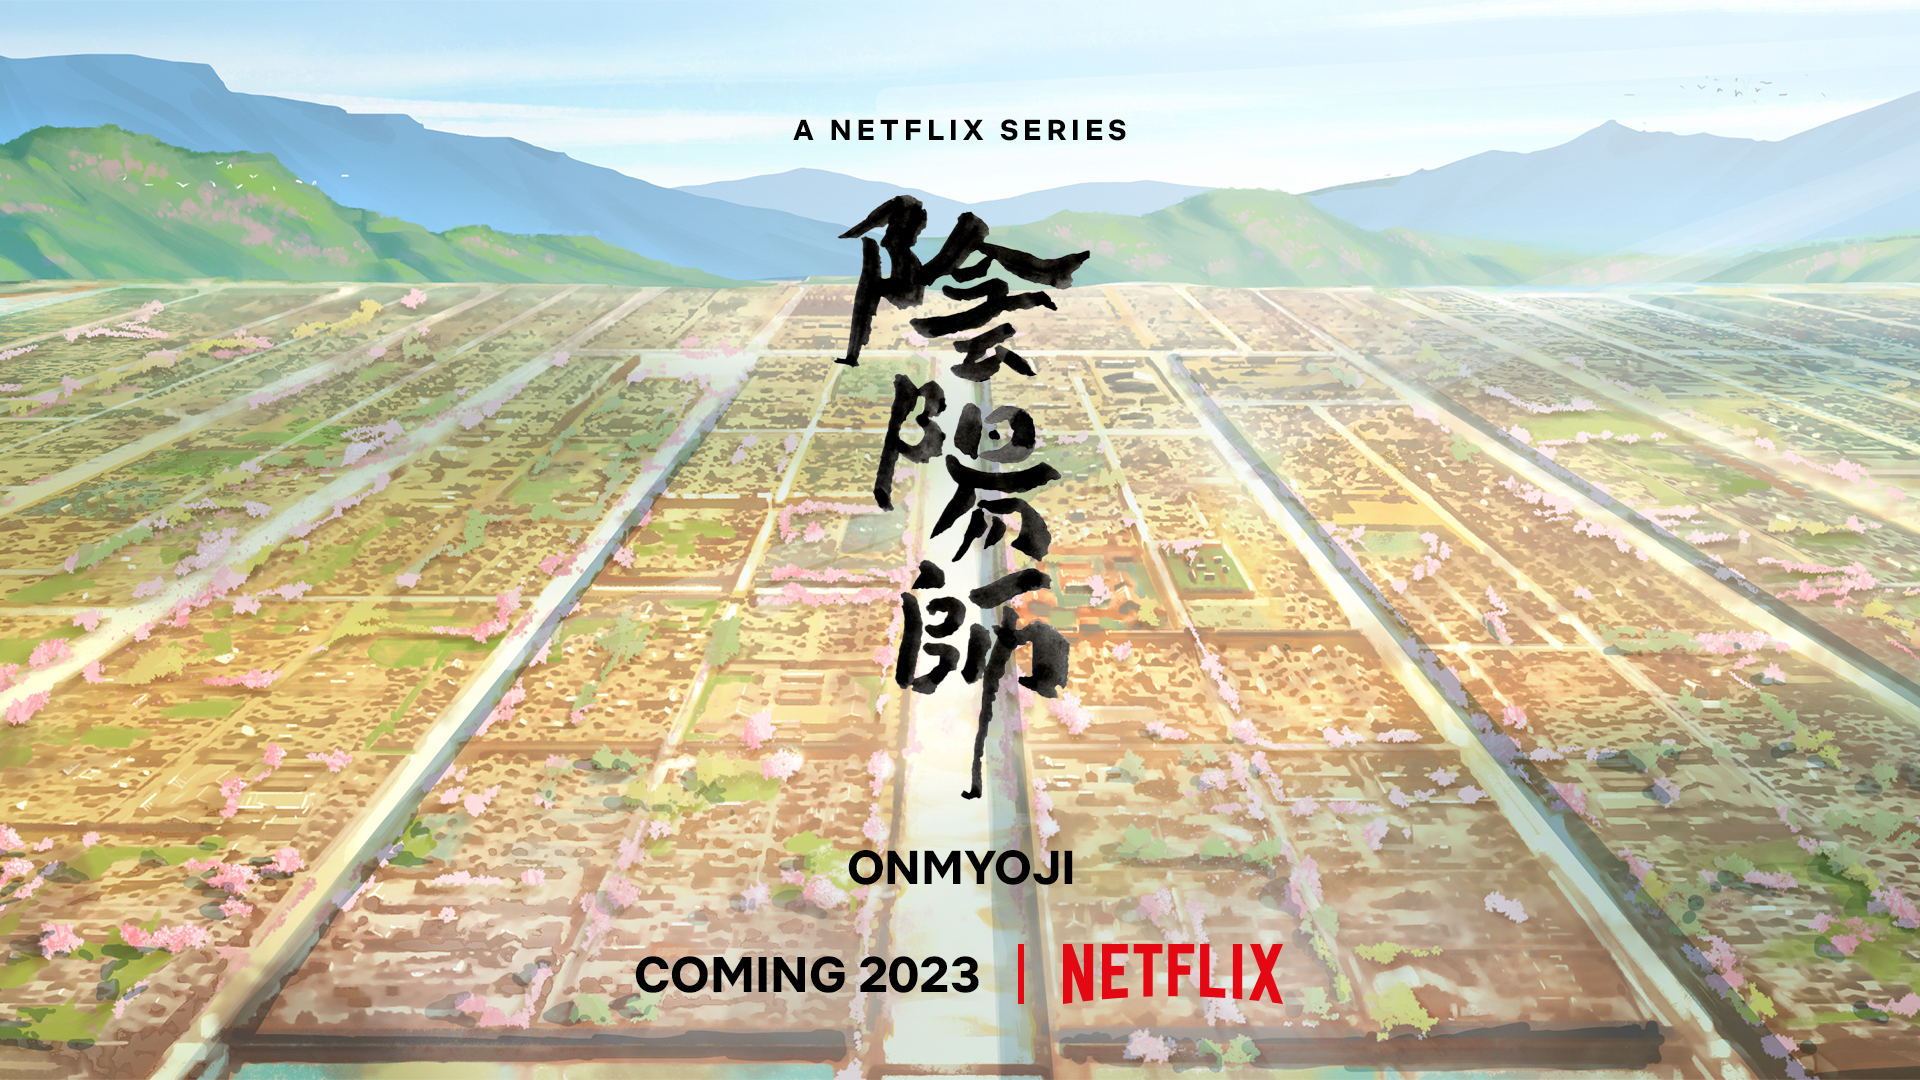 Netflix To Release Onmyoji Anime Adaptation in 2023